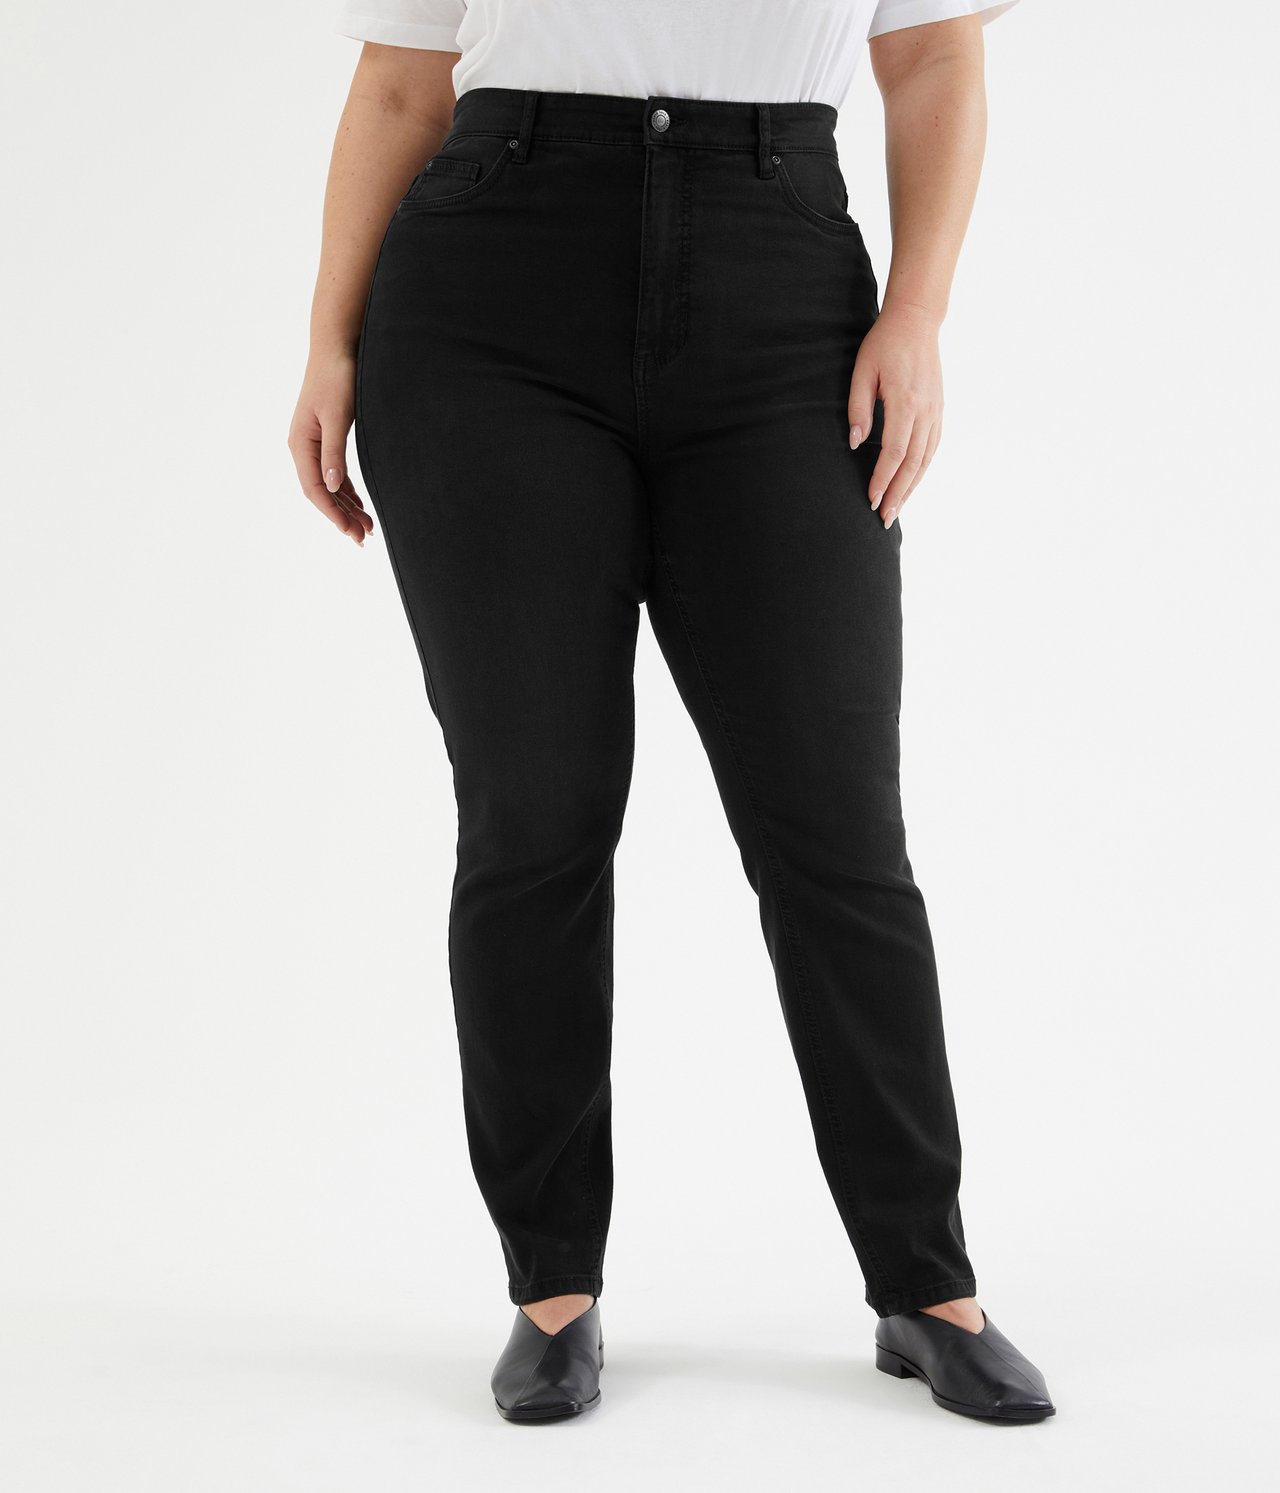 Jenny jeans straight slim fit Musta denimi - 44 - 3